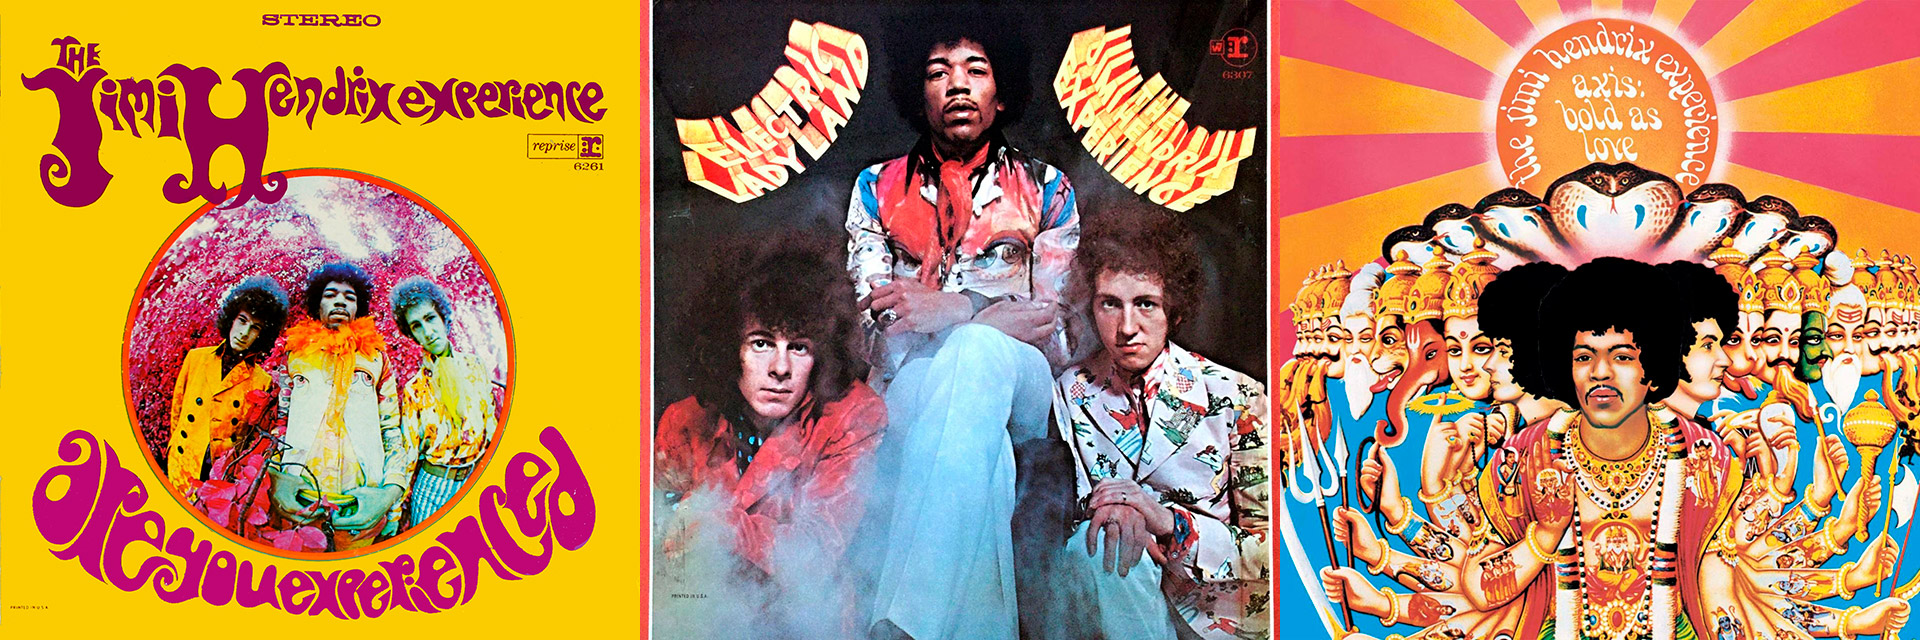 The Jimi Hendrix Experience editó tres álbumes en su corta pero intensa historia: "Are You Experienced?" (1967), "Axis: Bold As Love" (1967) y "Electric Ladyland" (1968) 